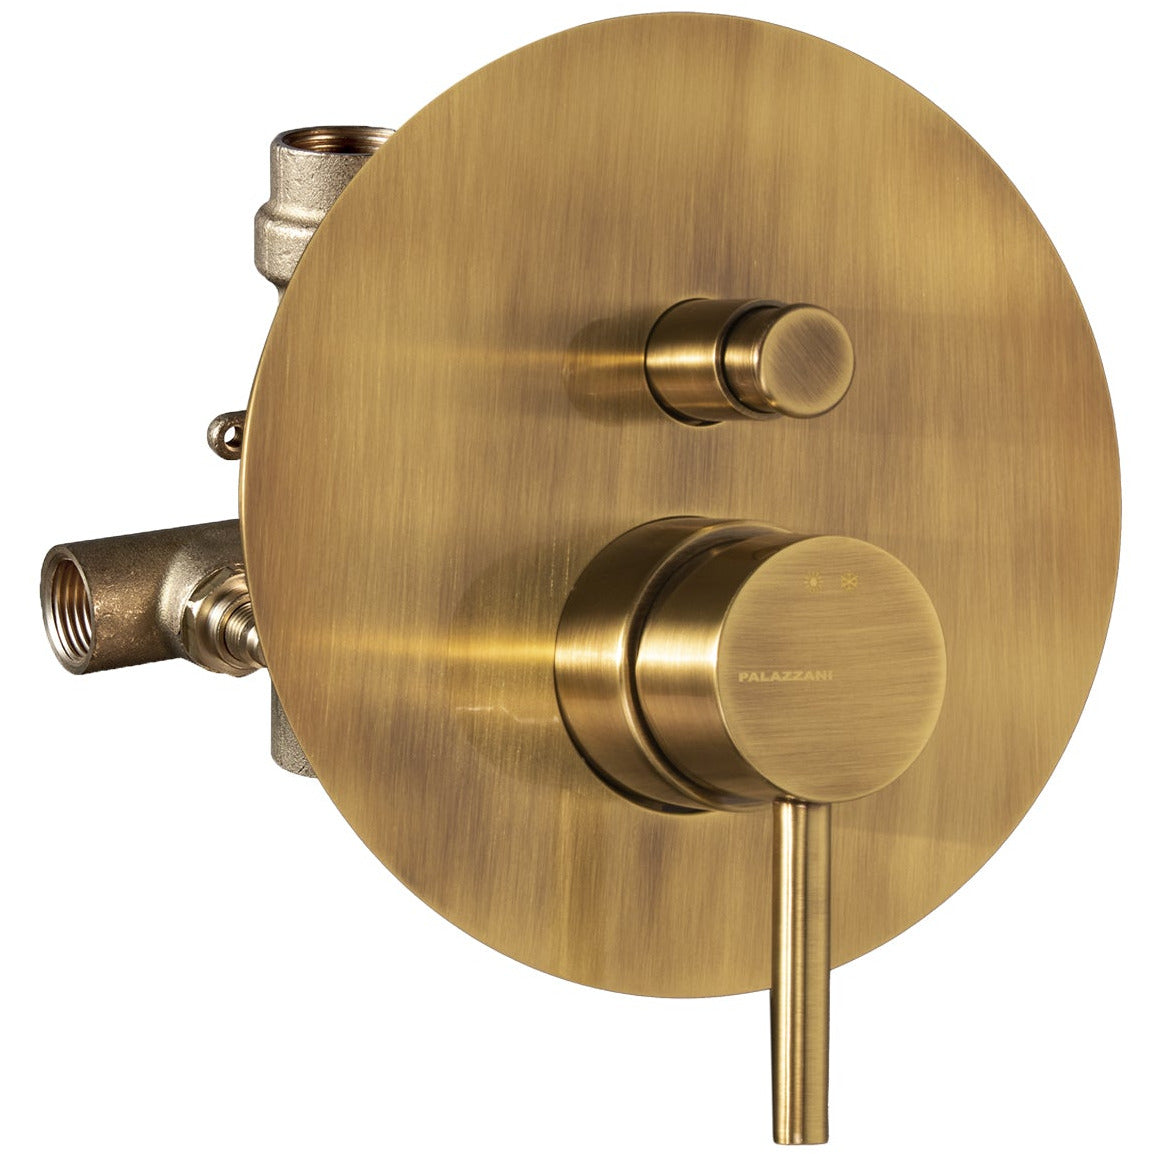 Shower valve DIGIT pressure balanced 2 functions 121152